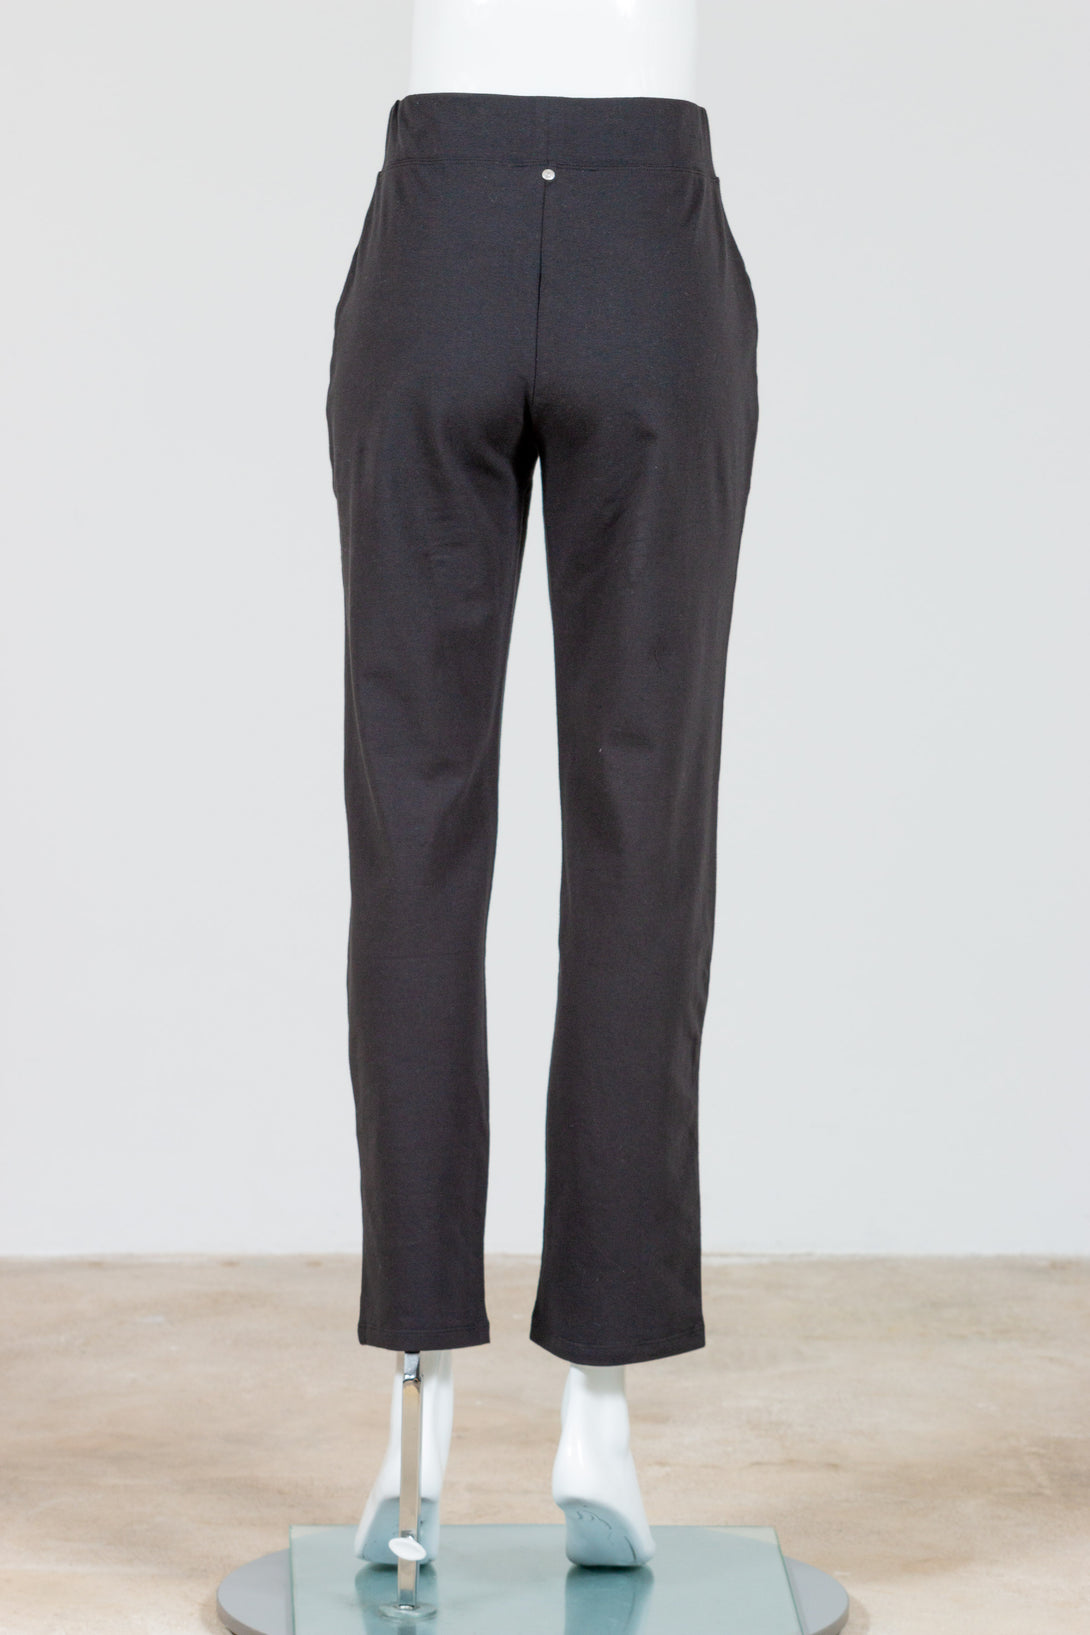 Neon Buddha Everyday Pants (Cotton Jersey) {Black}